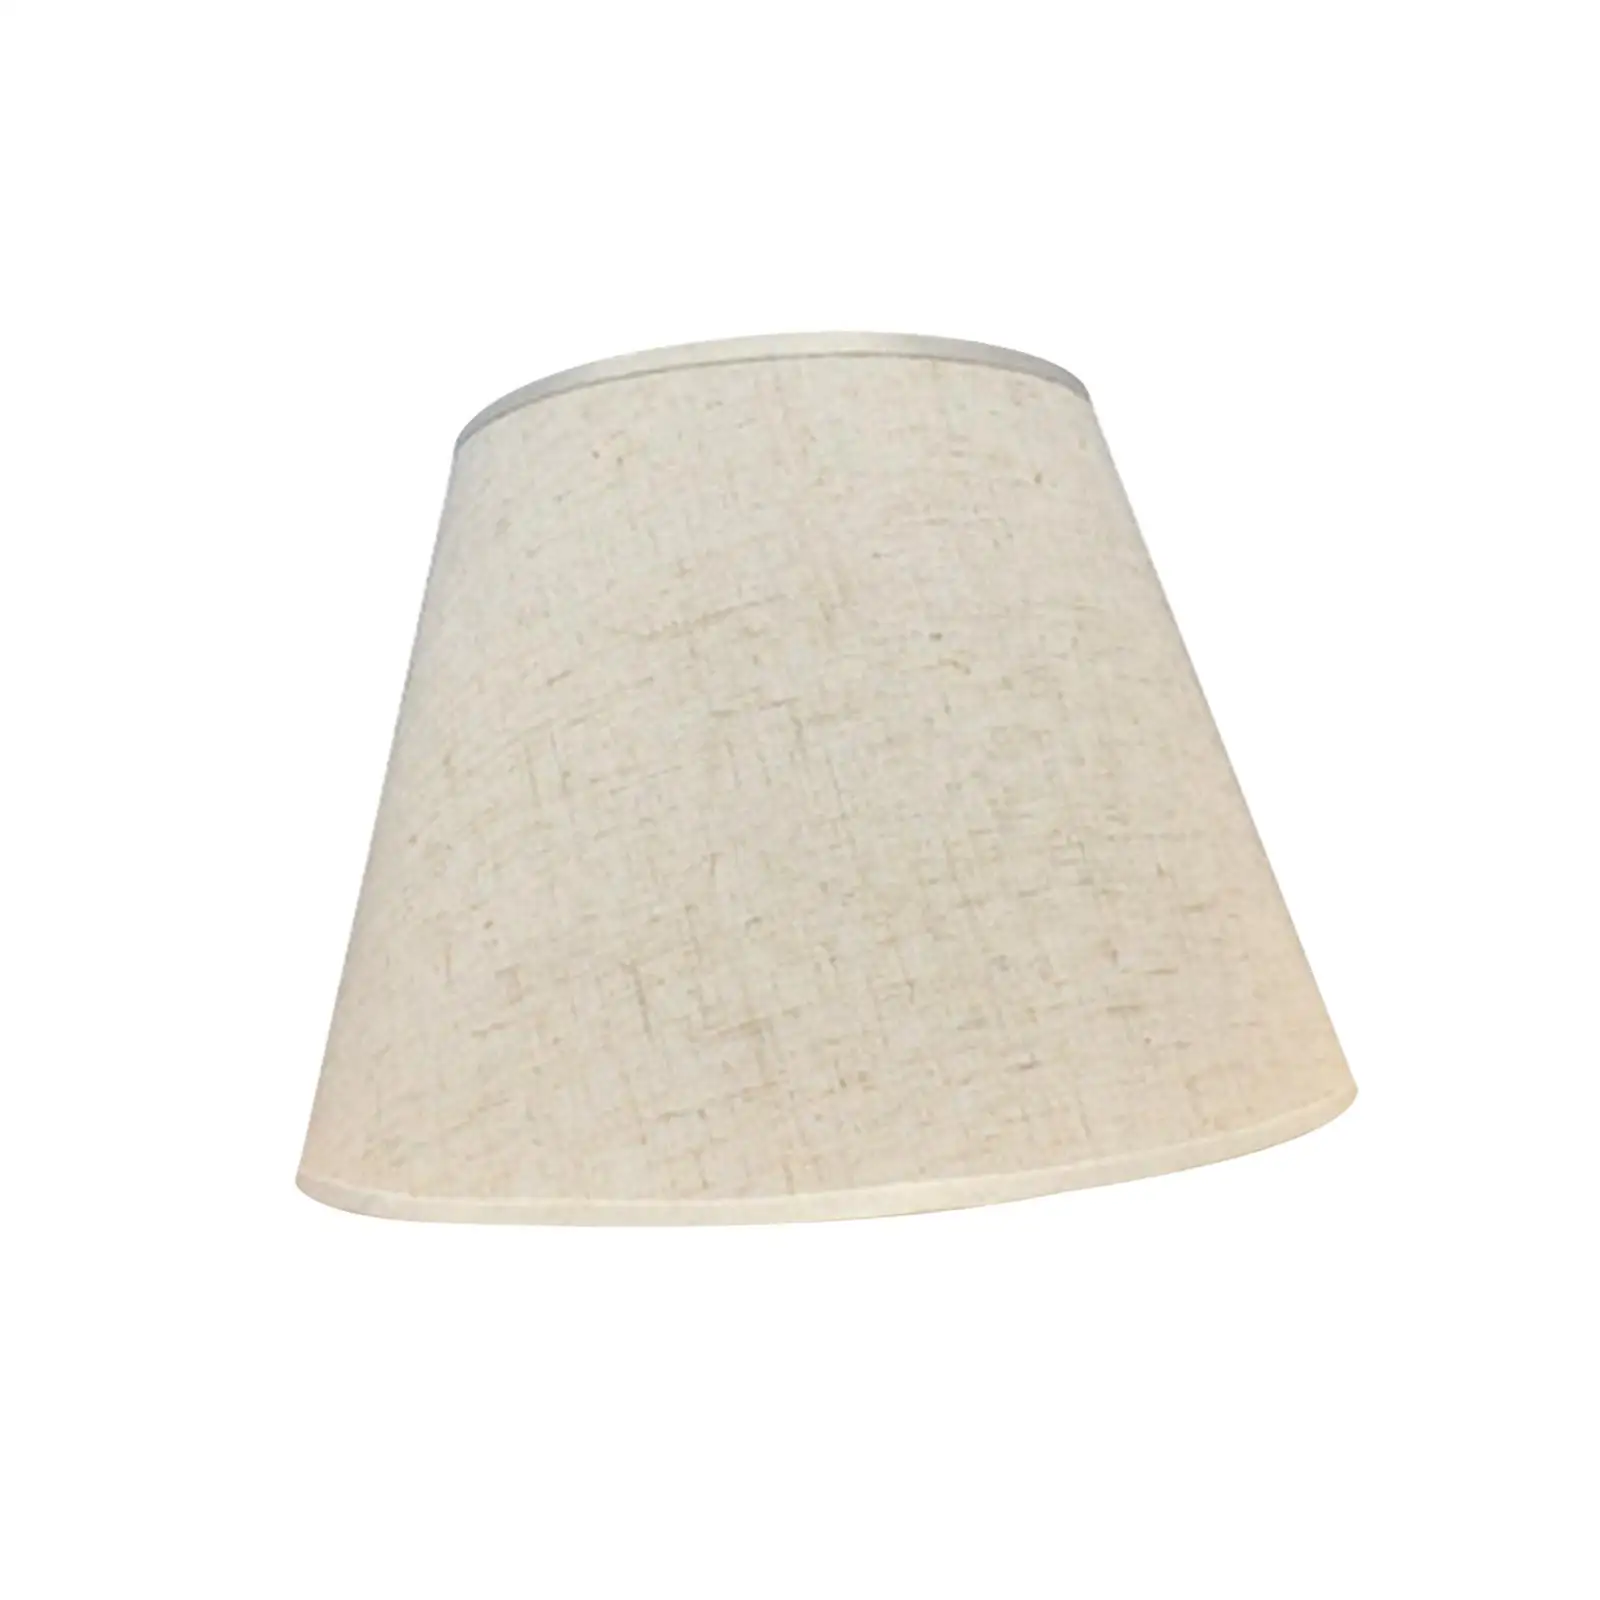 Table Lamp Shade Desk Light Lampshade Light Fixture Shade Pendant Light Cover for Home Office Kitchen Island Bedroom Restaurant